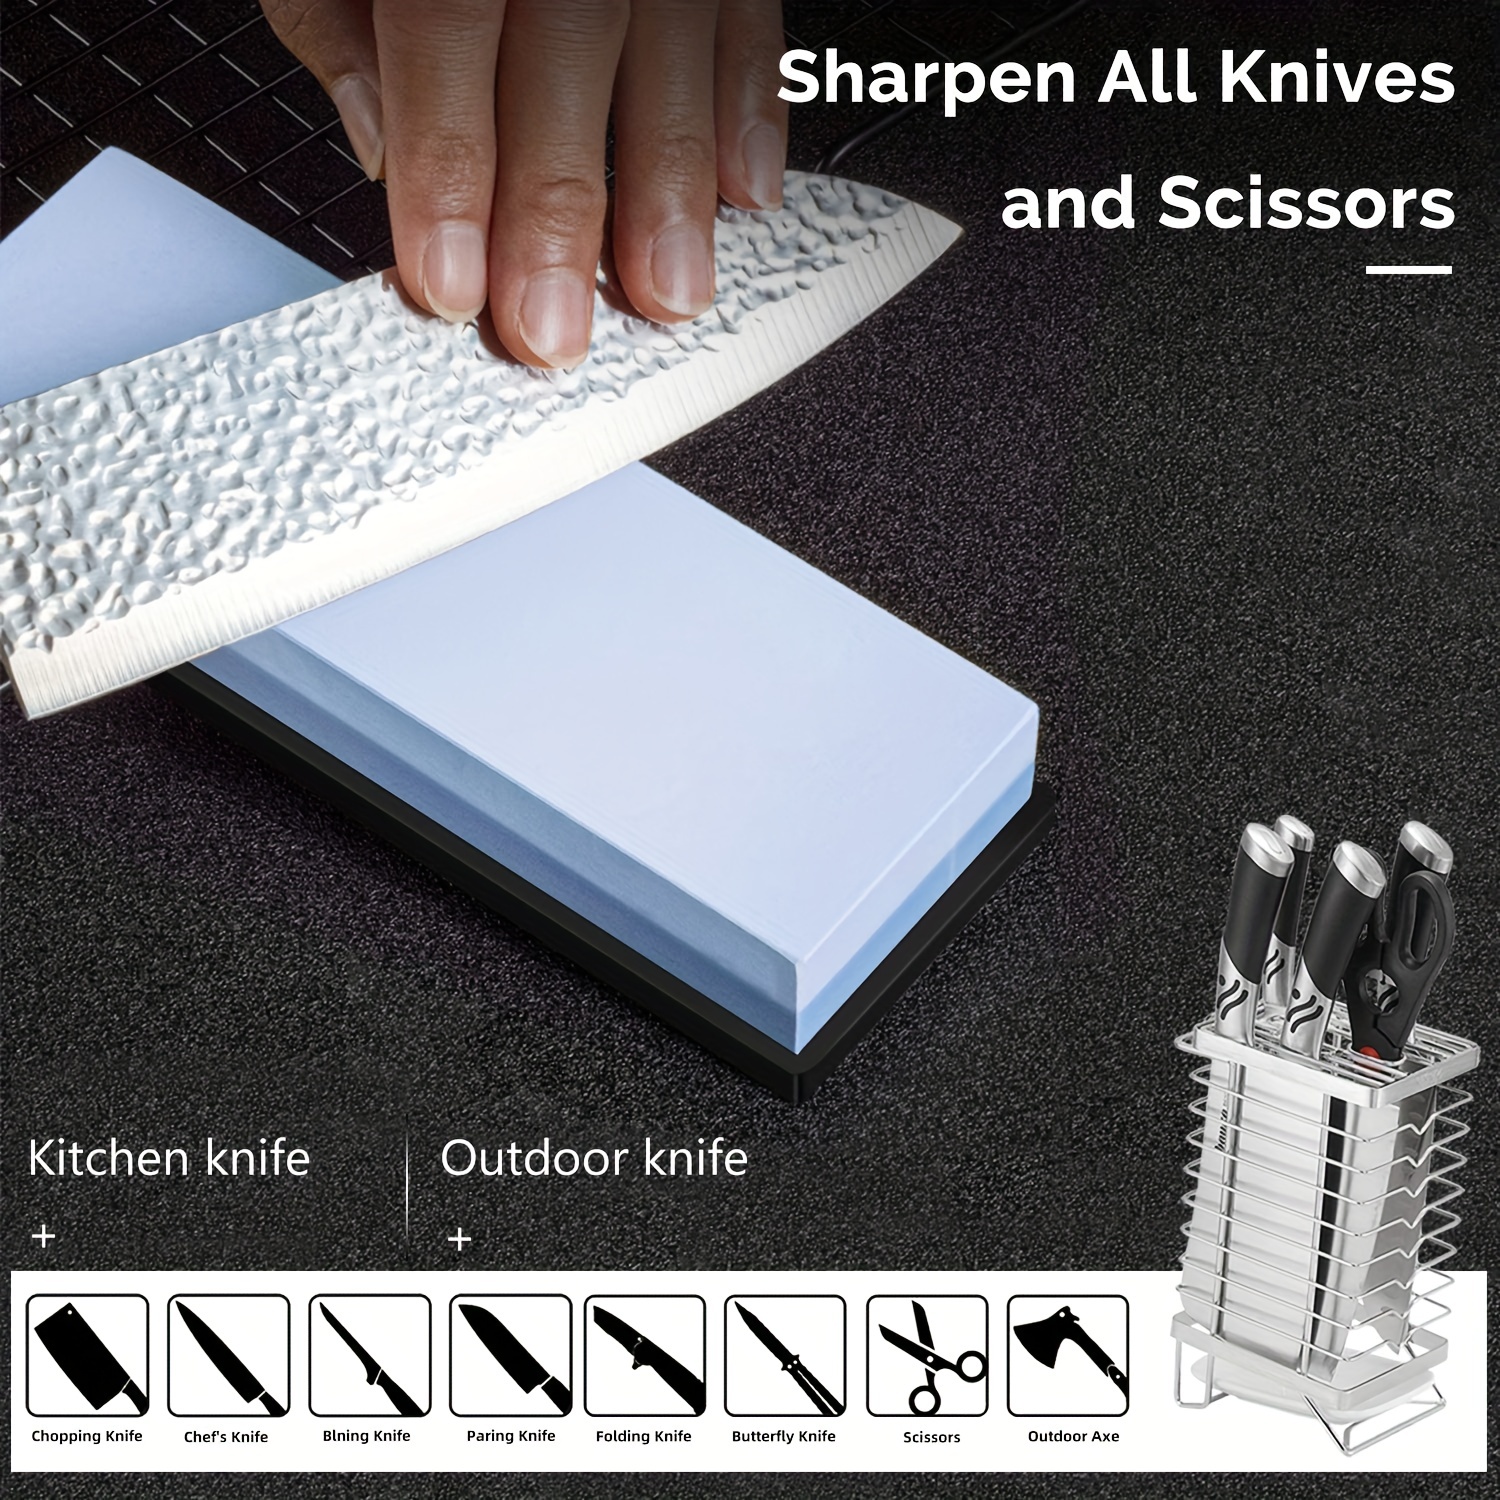 Sharp & Professional: Knife Sharpening Stone Set With Leather